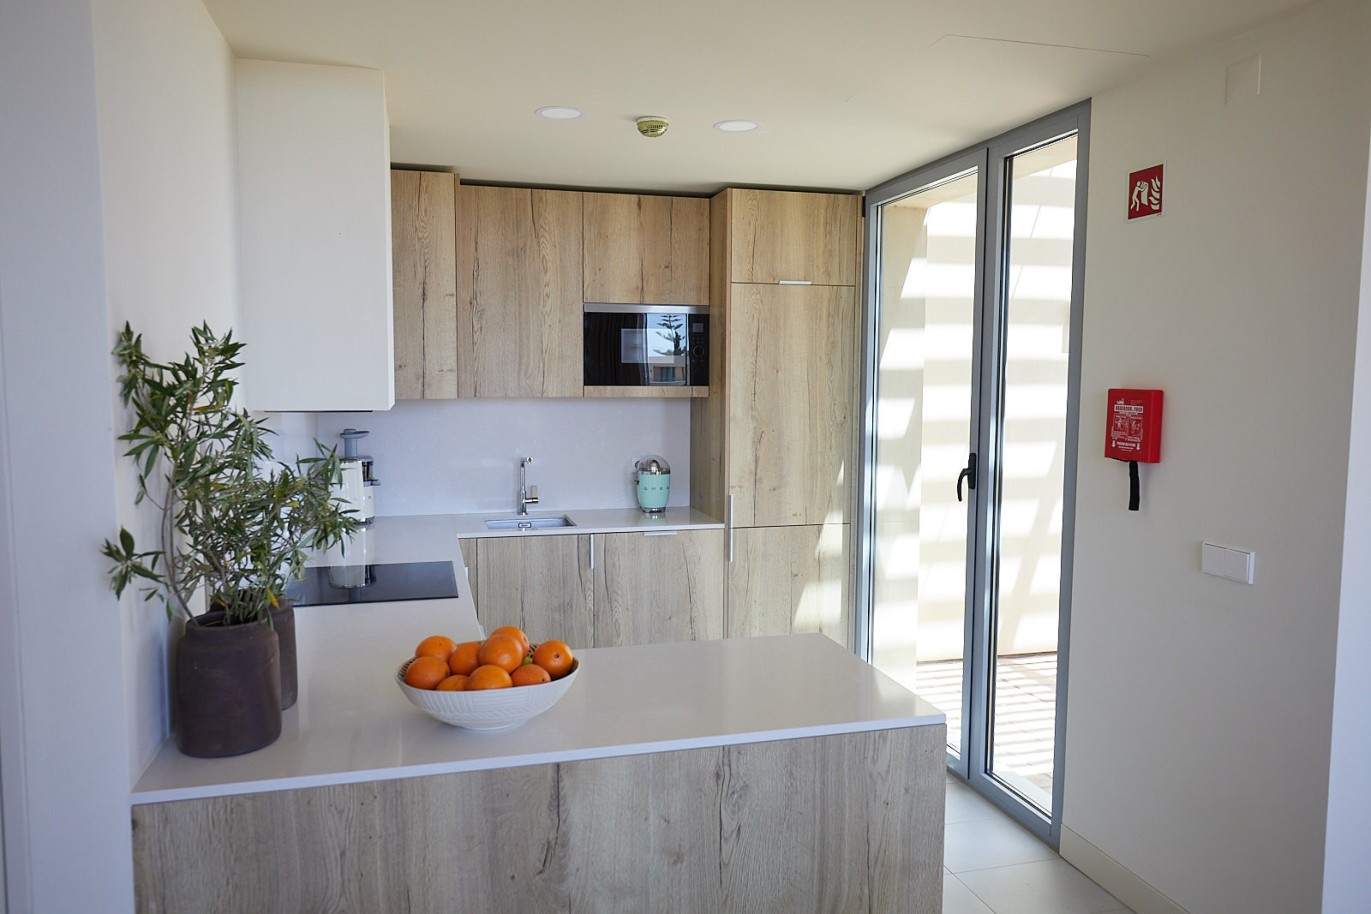 2 bedroom apartment in resort, for sale in Porches, Algarve_229202